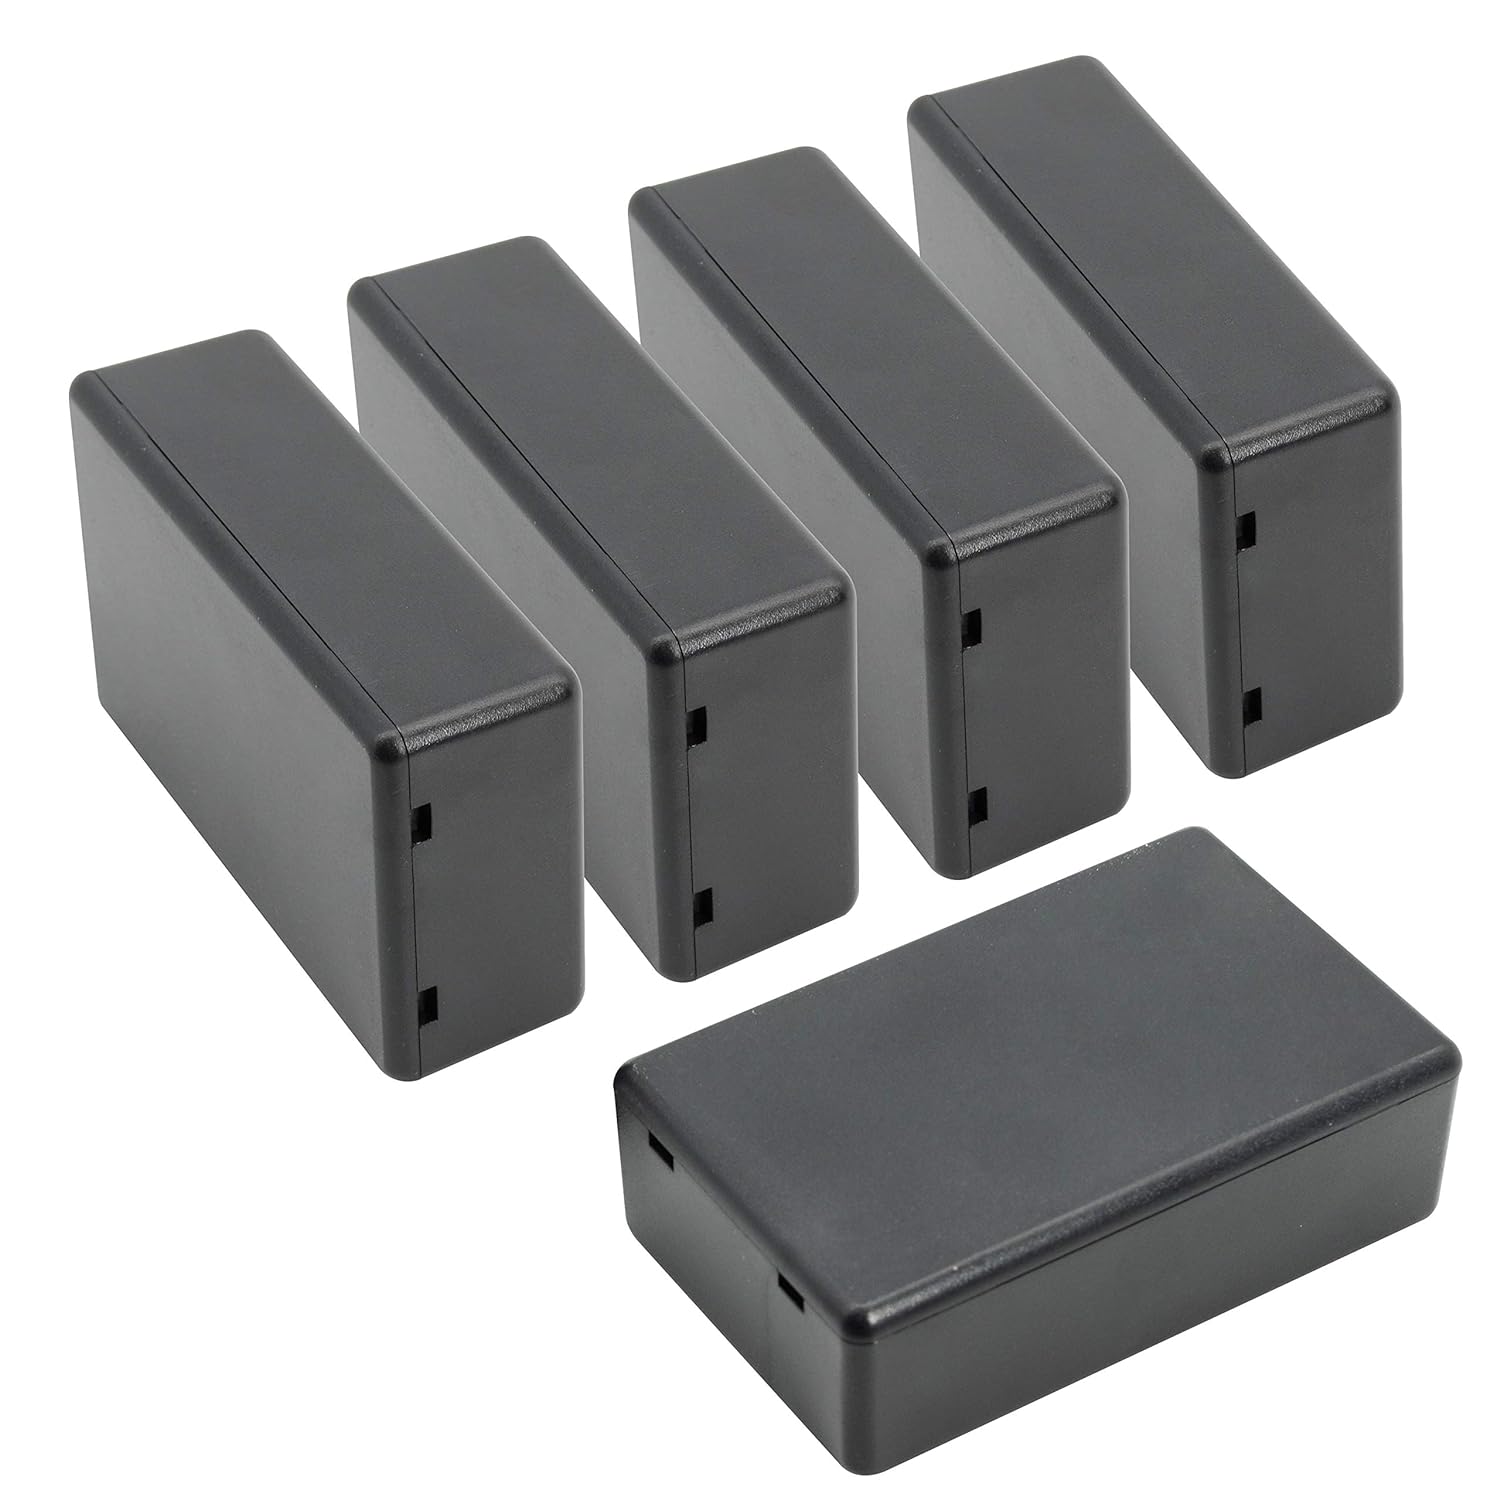 Generic LeMotech 5 Pieces Plastic Project Box ES Junction Case for Electronic Project, Black 3.15 x 1.97 x 1.02 inch (80 x 50x 26 mm)